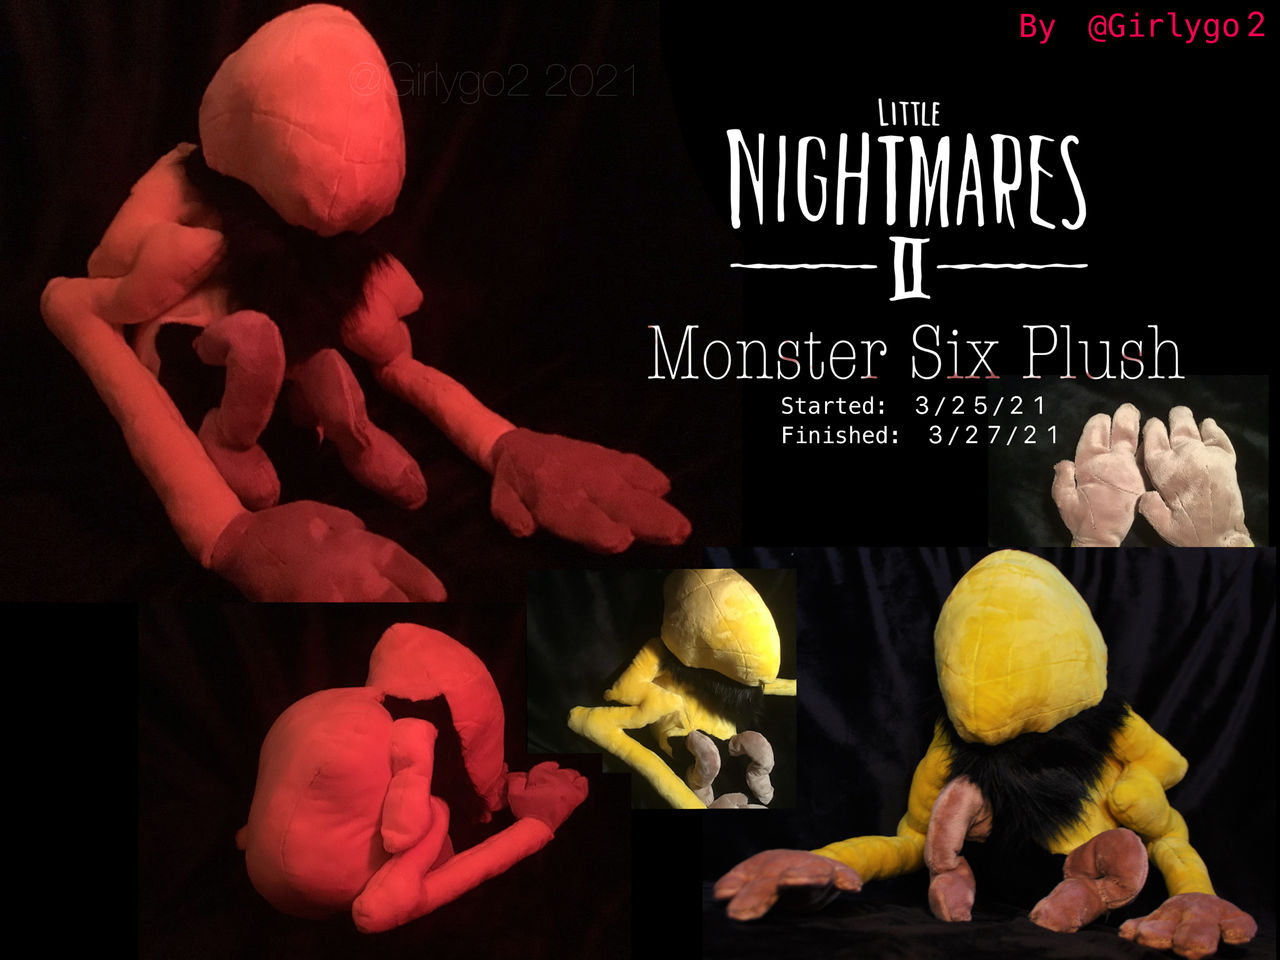 Mono And Six (Little Nightmares II) by Emigonpai on DeviantArt